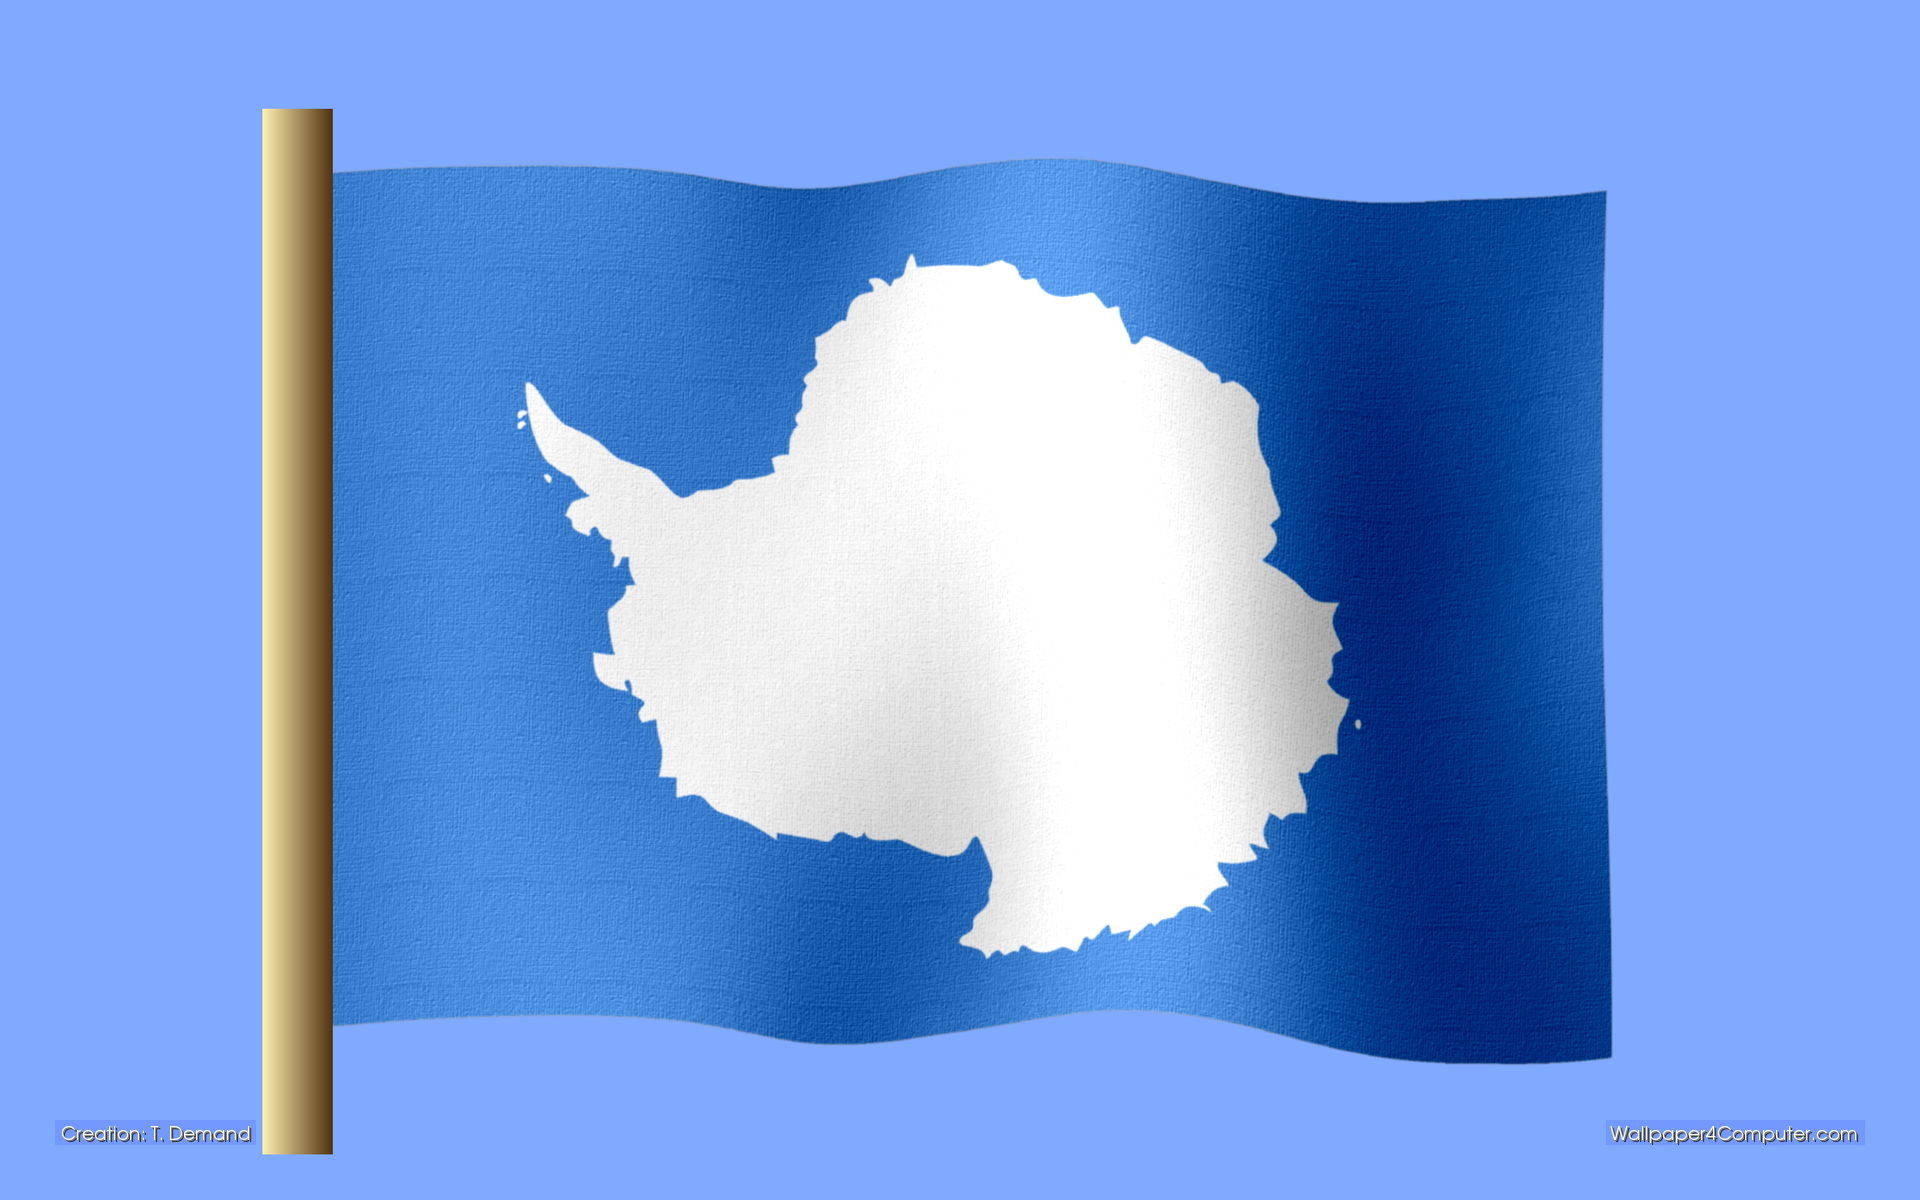 Герб антарктиды. Флаг Антарктиды. Антарктида и Антарктика флаги. Антарктида материк флаг. Флаг Antarctica.